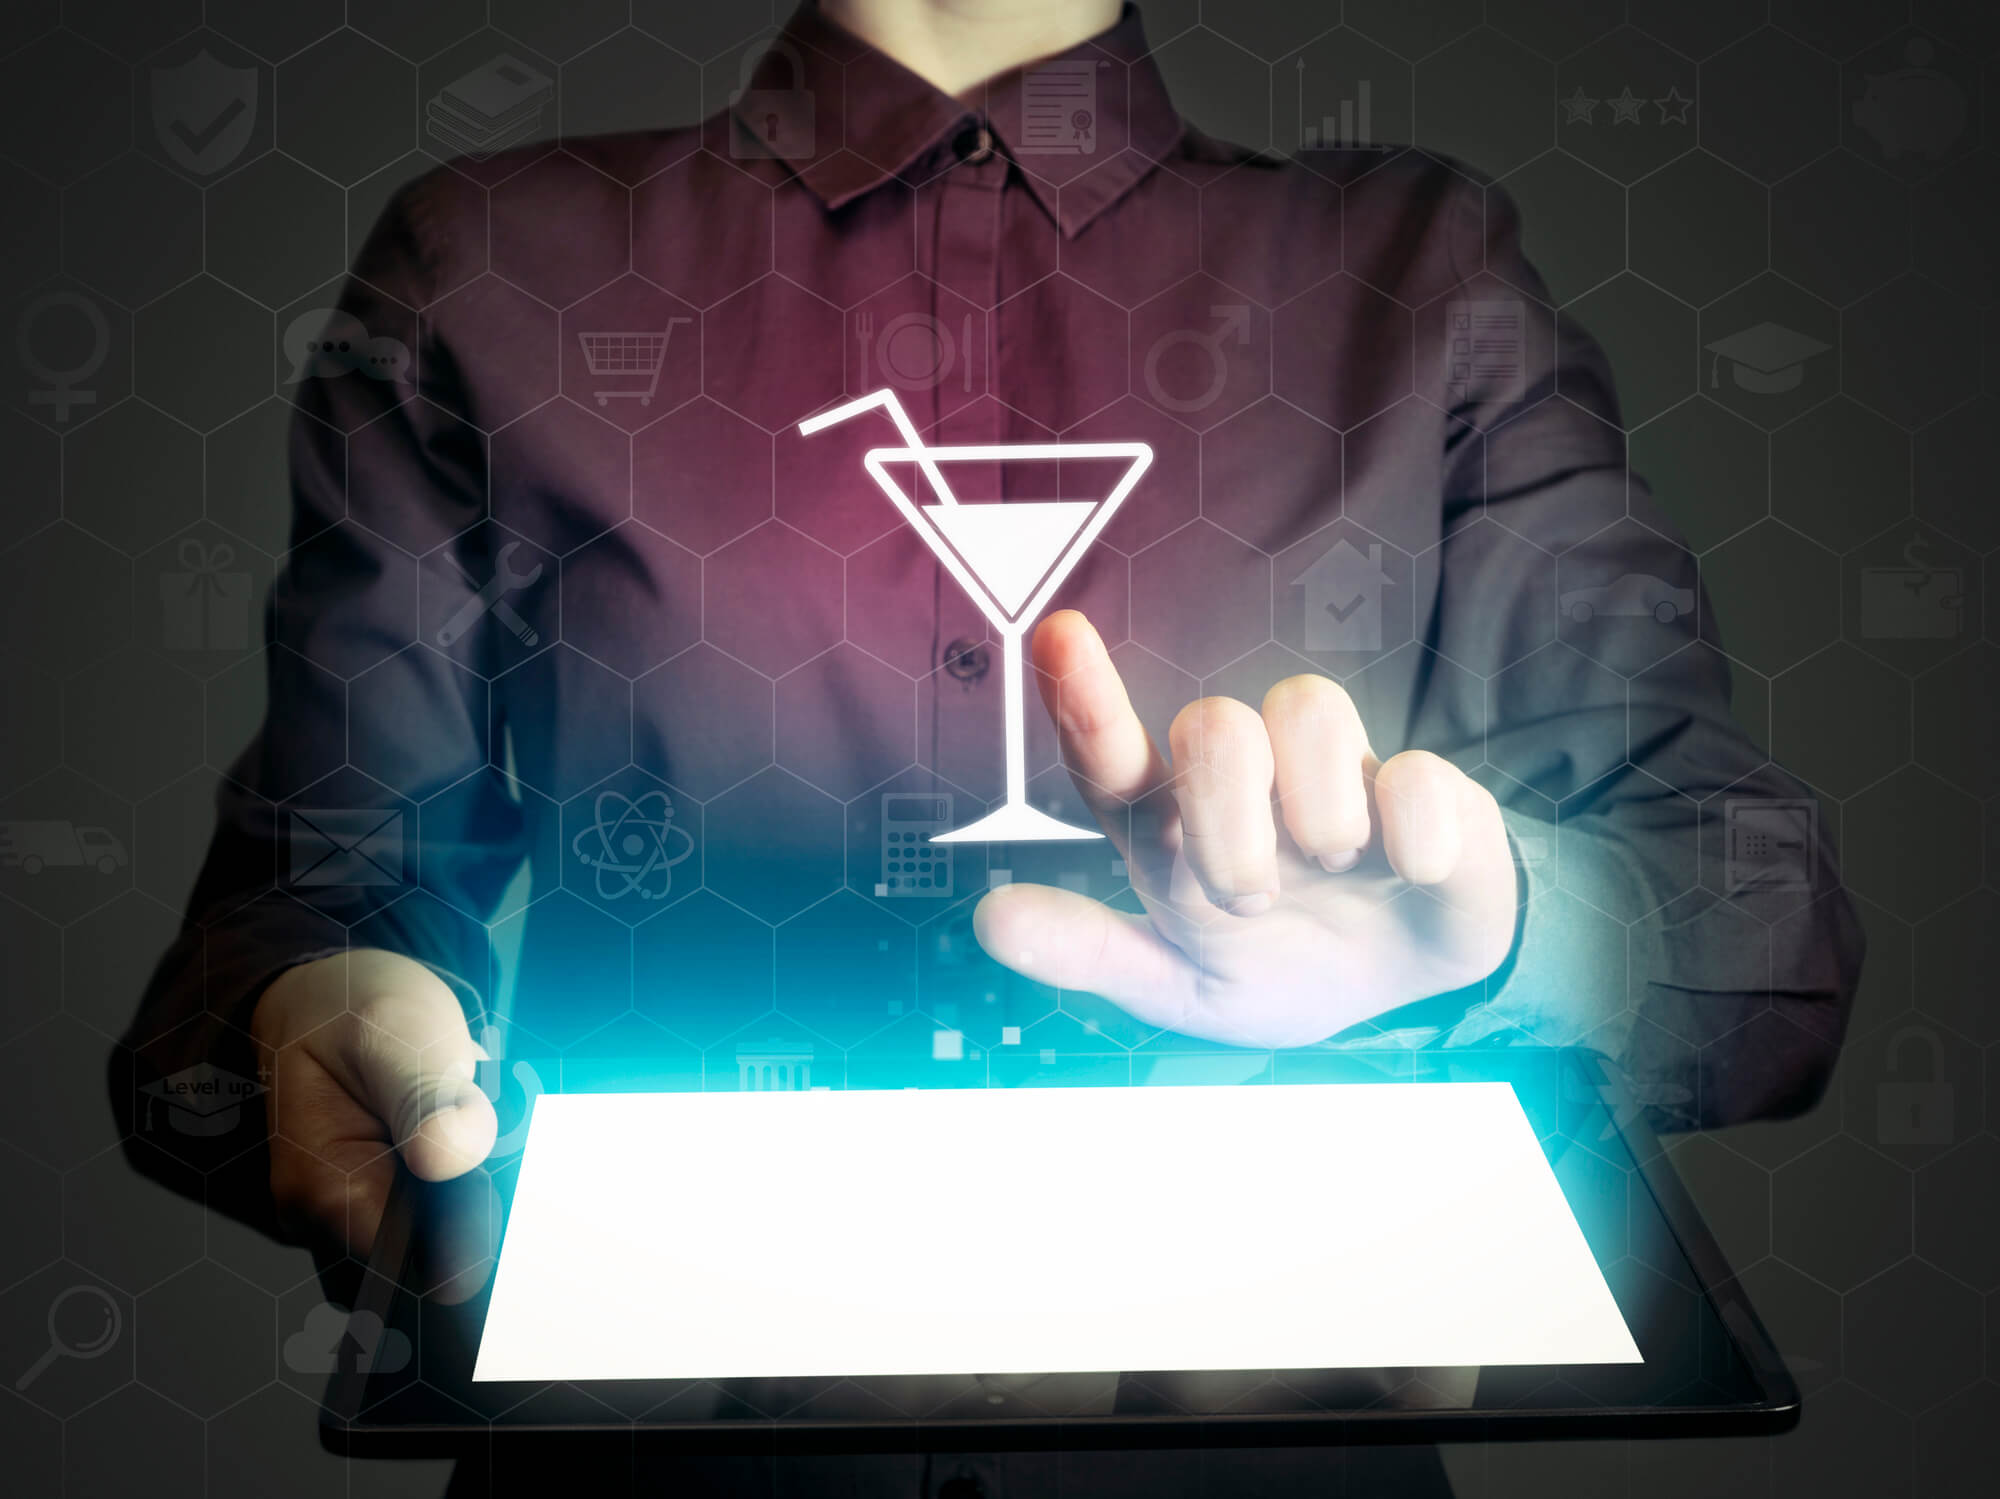 Digital cocktail menu on a tablet